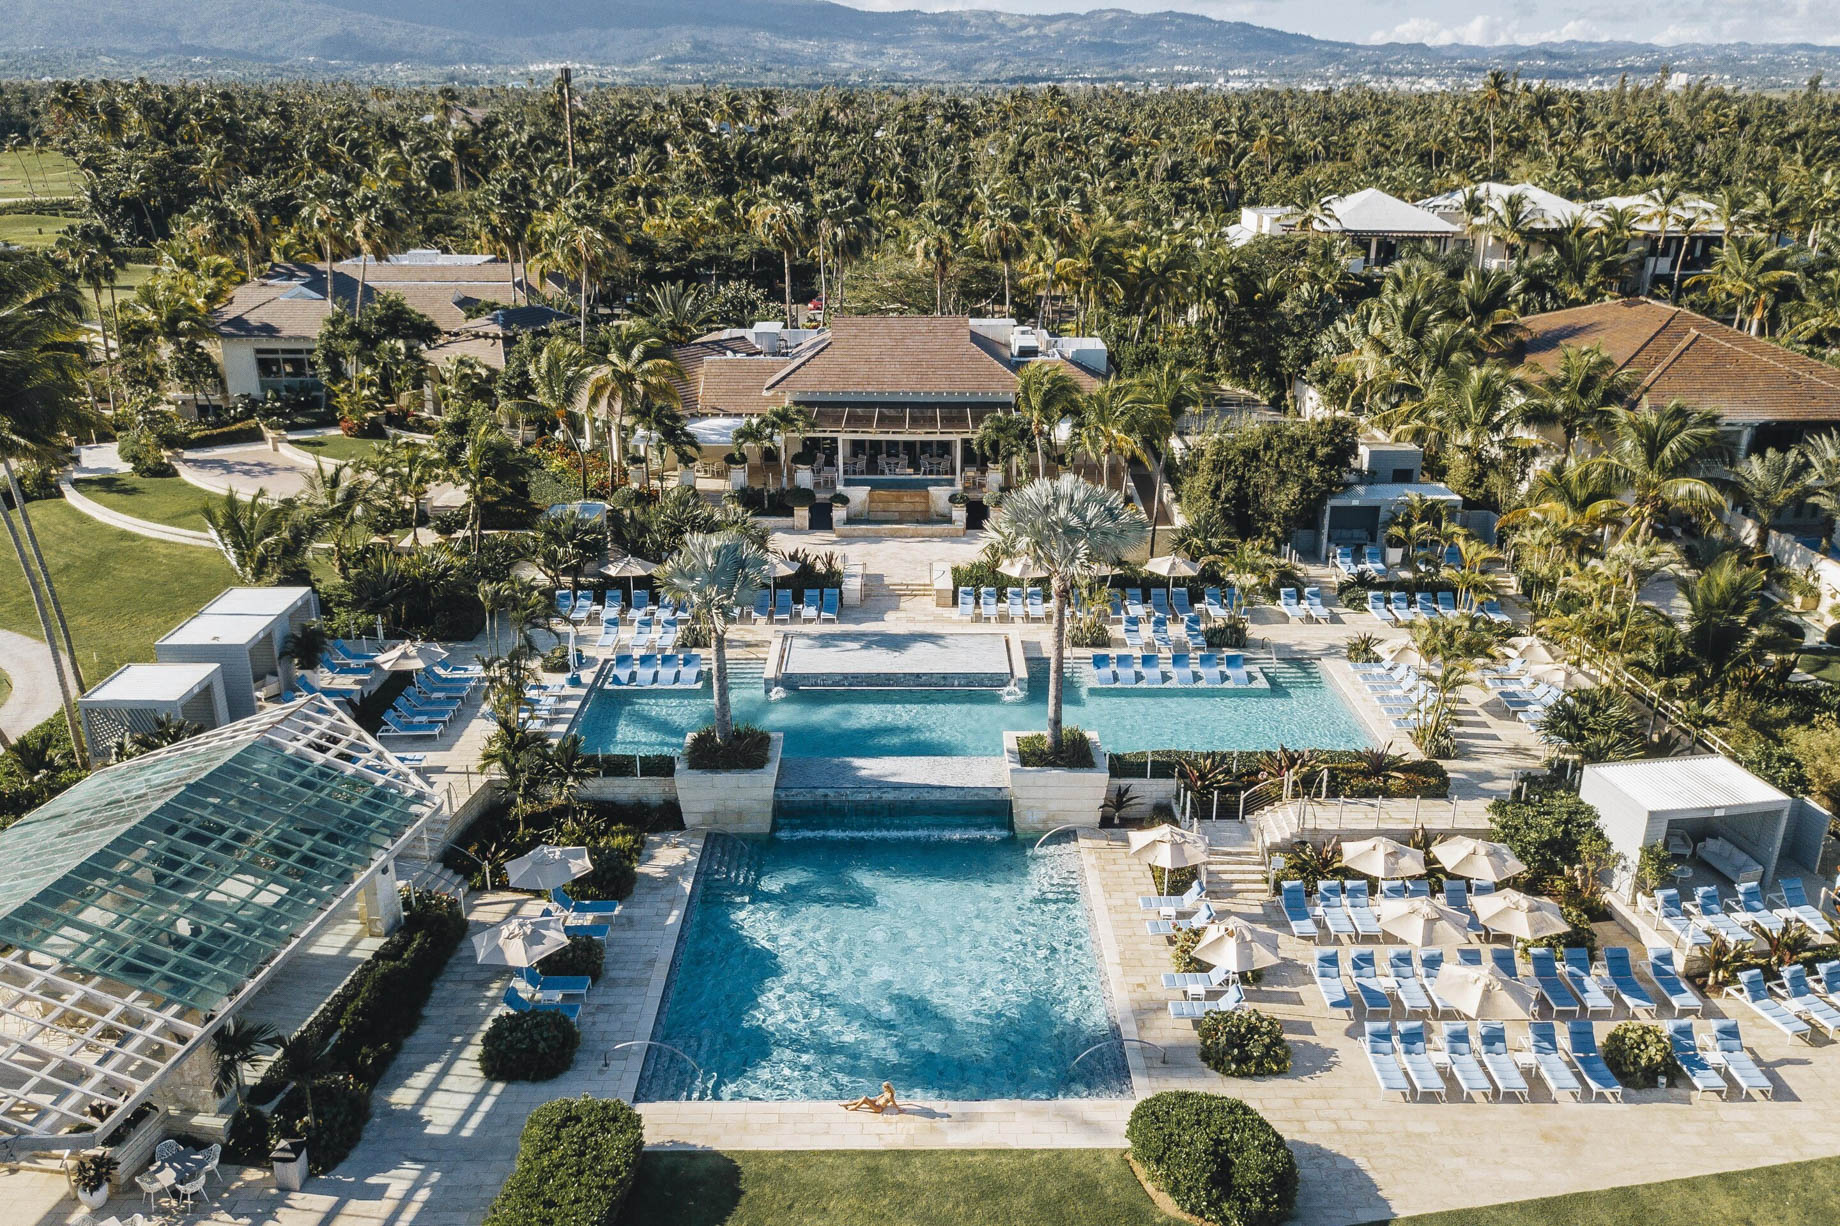 The St. Regis Bahia Beach Resort – Rio Grande, Puerto Rico – Beach Club Pool And Facilities